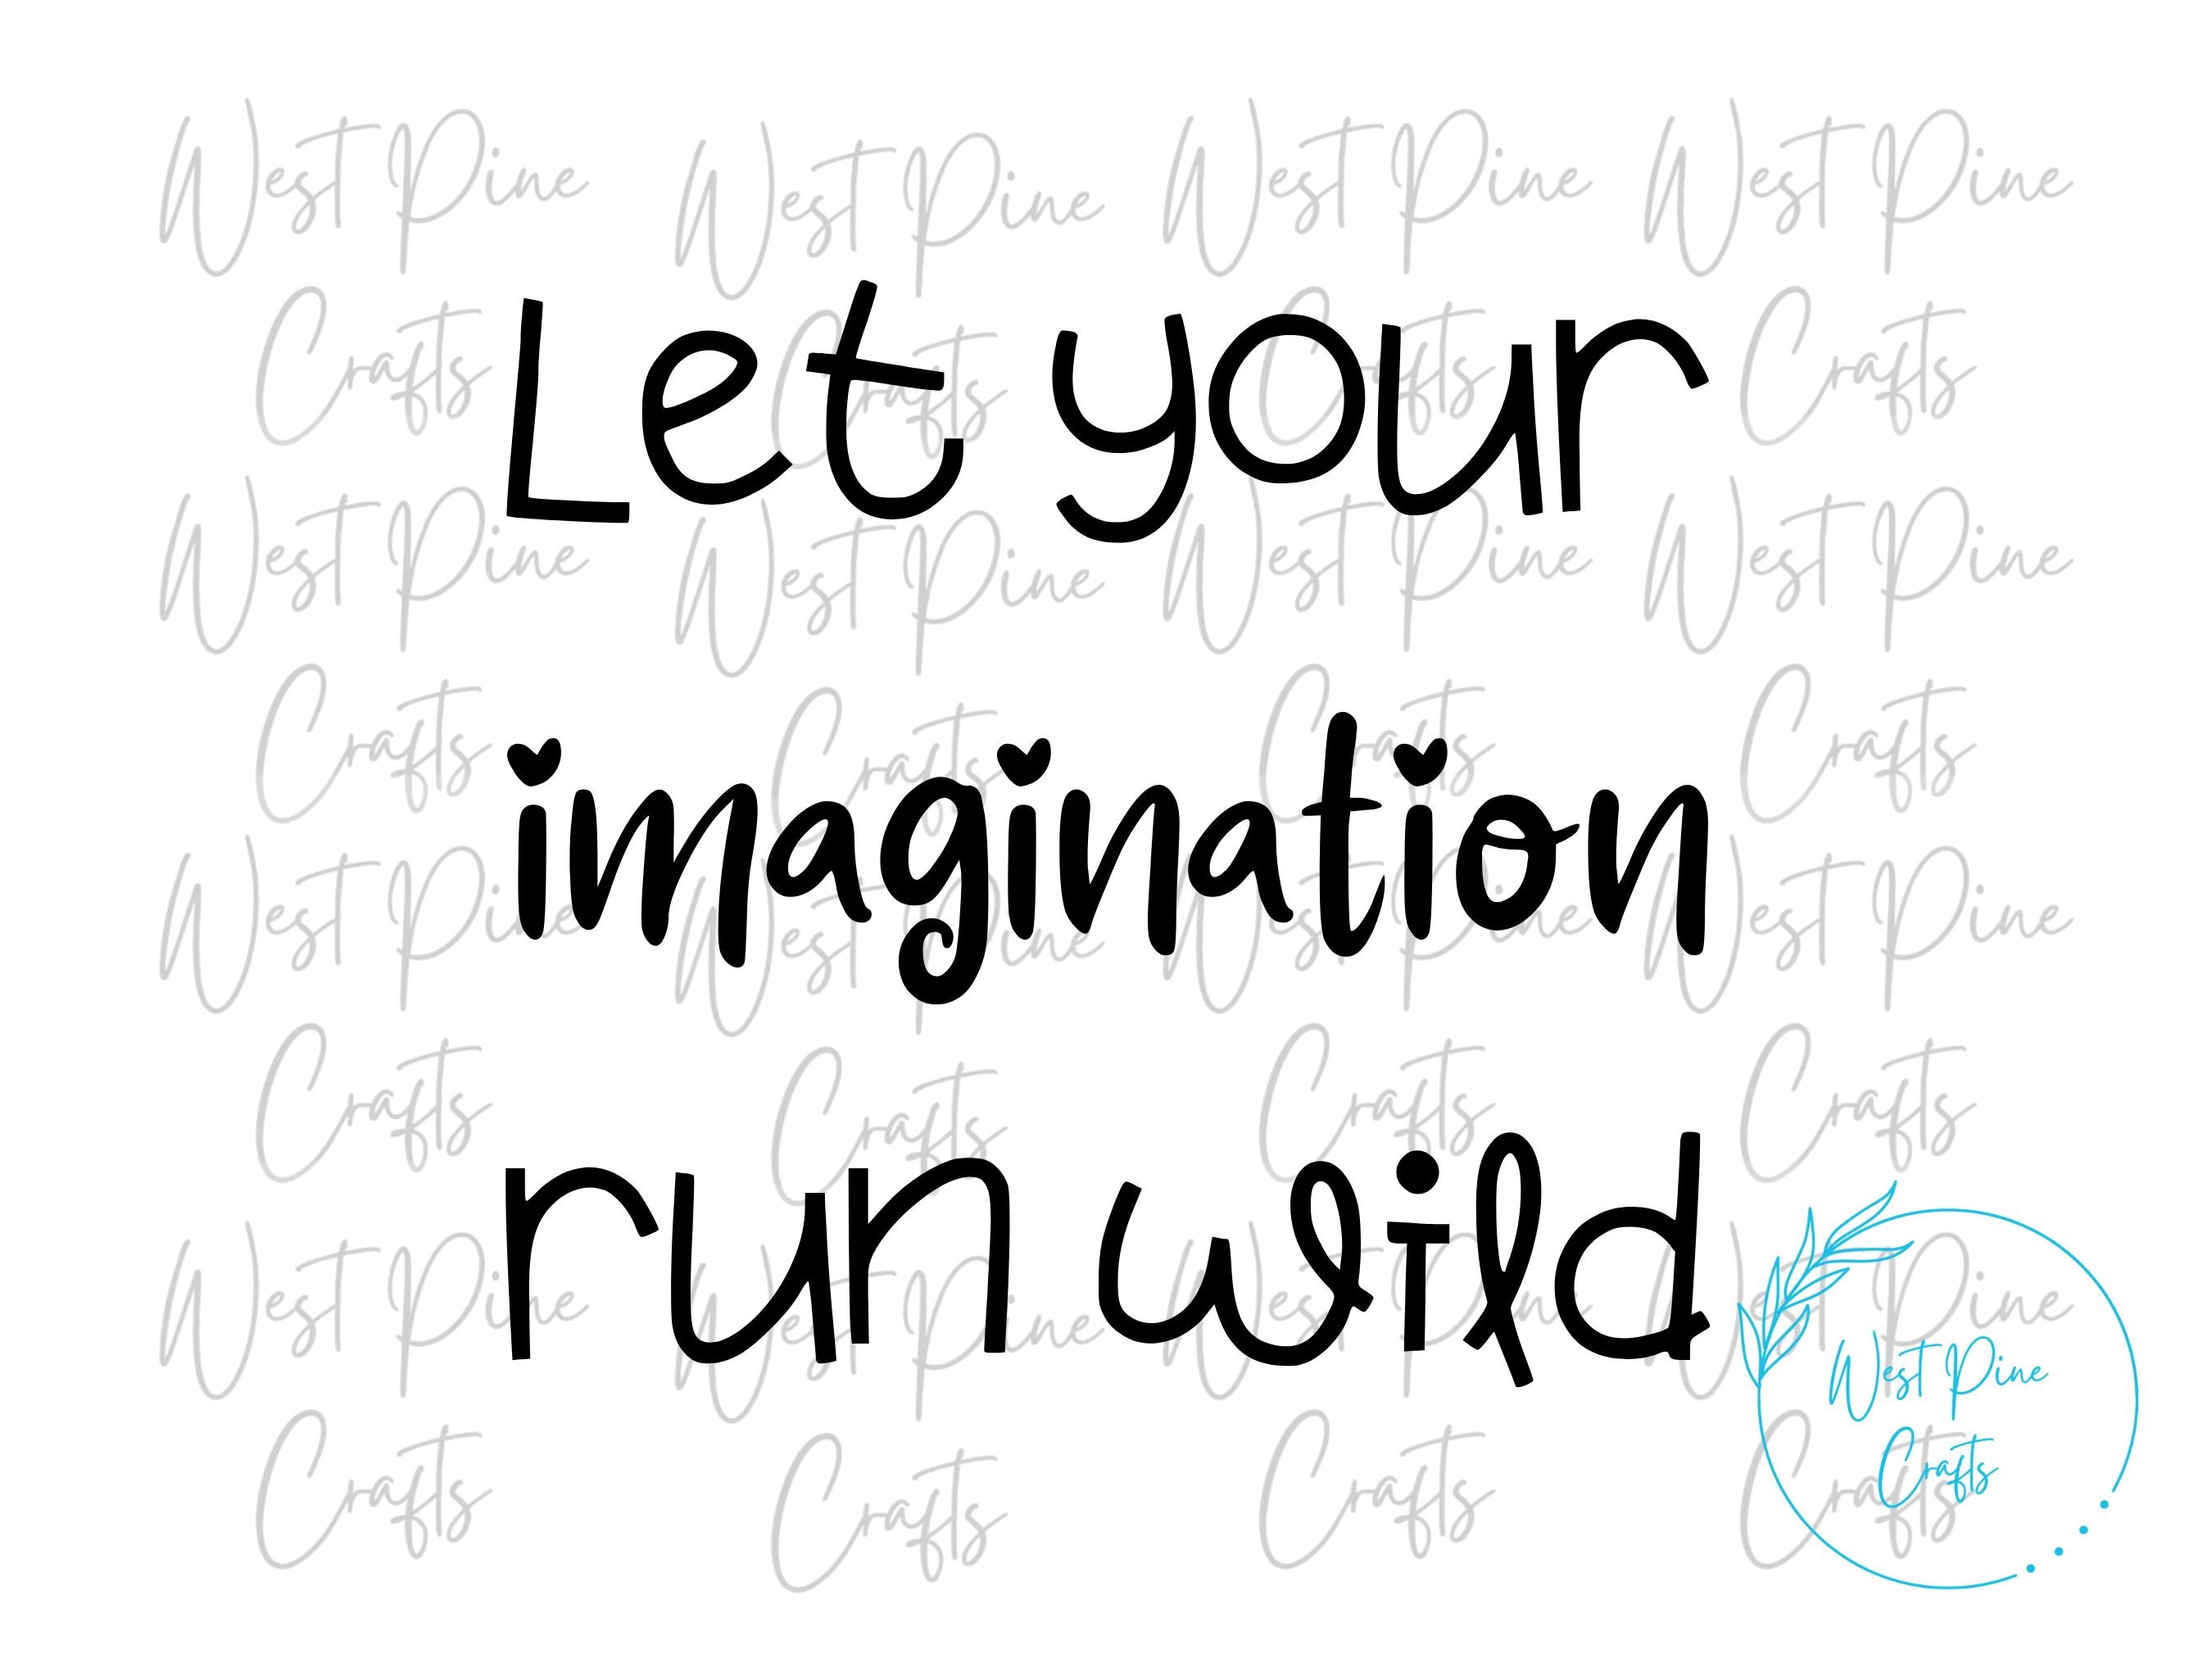 Let your Imagination Run Wild